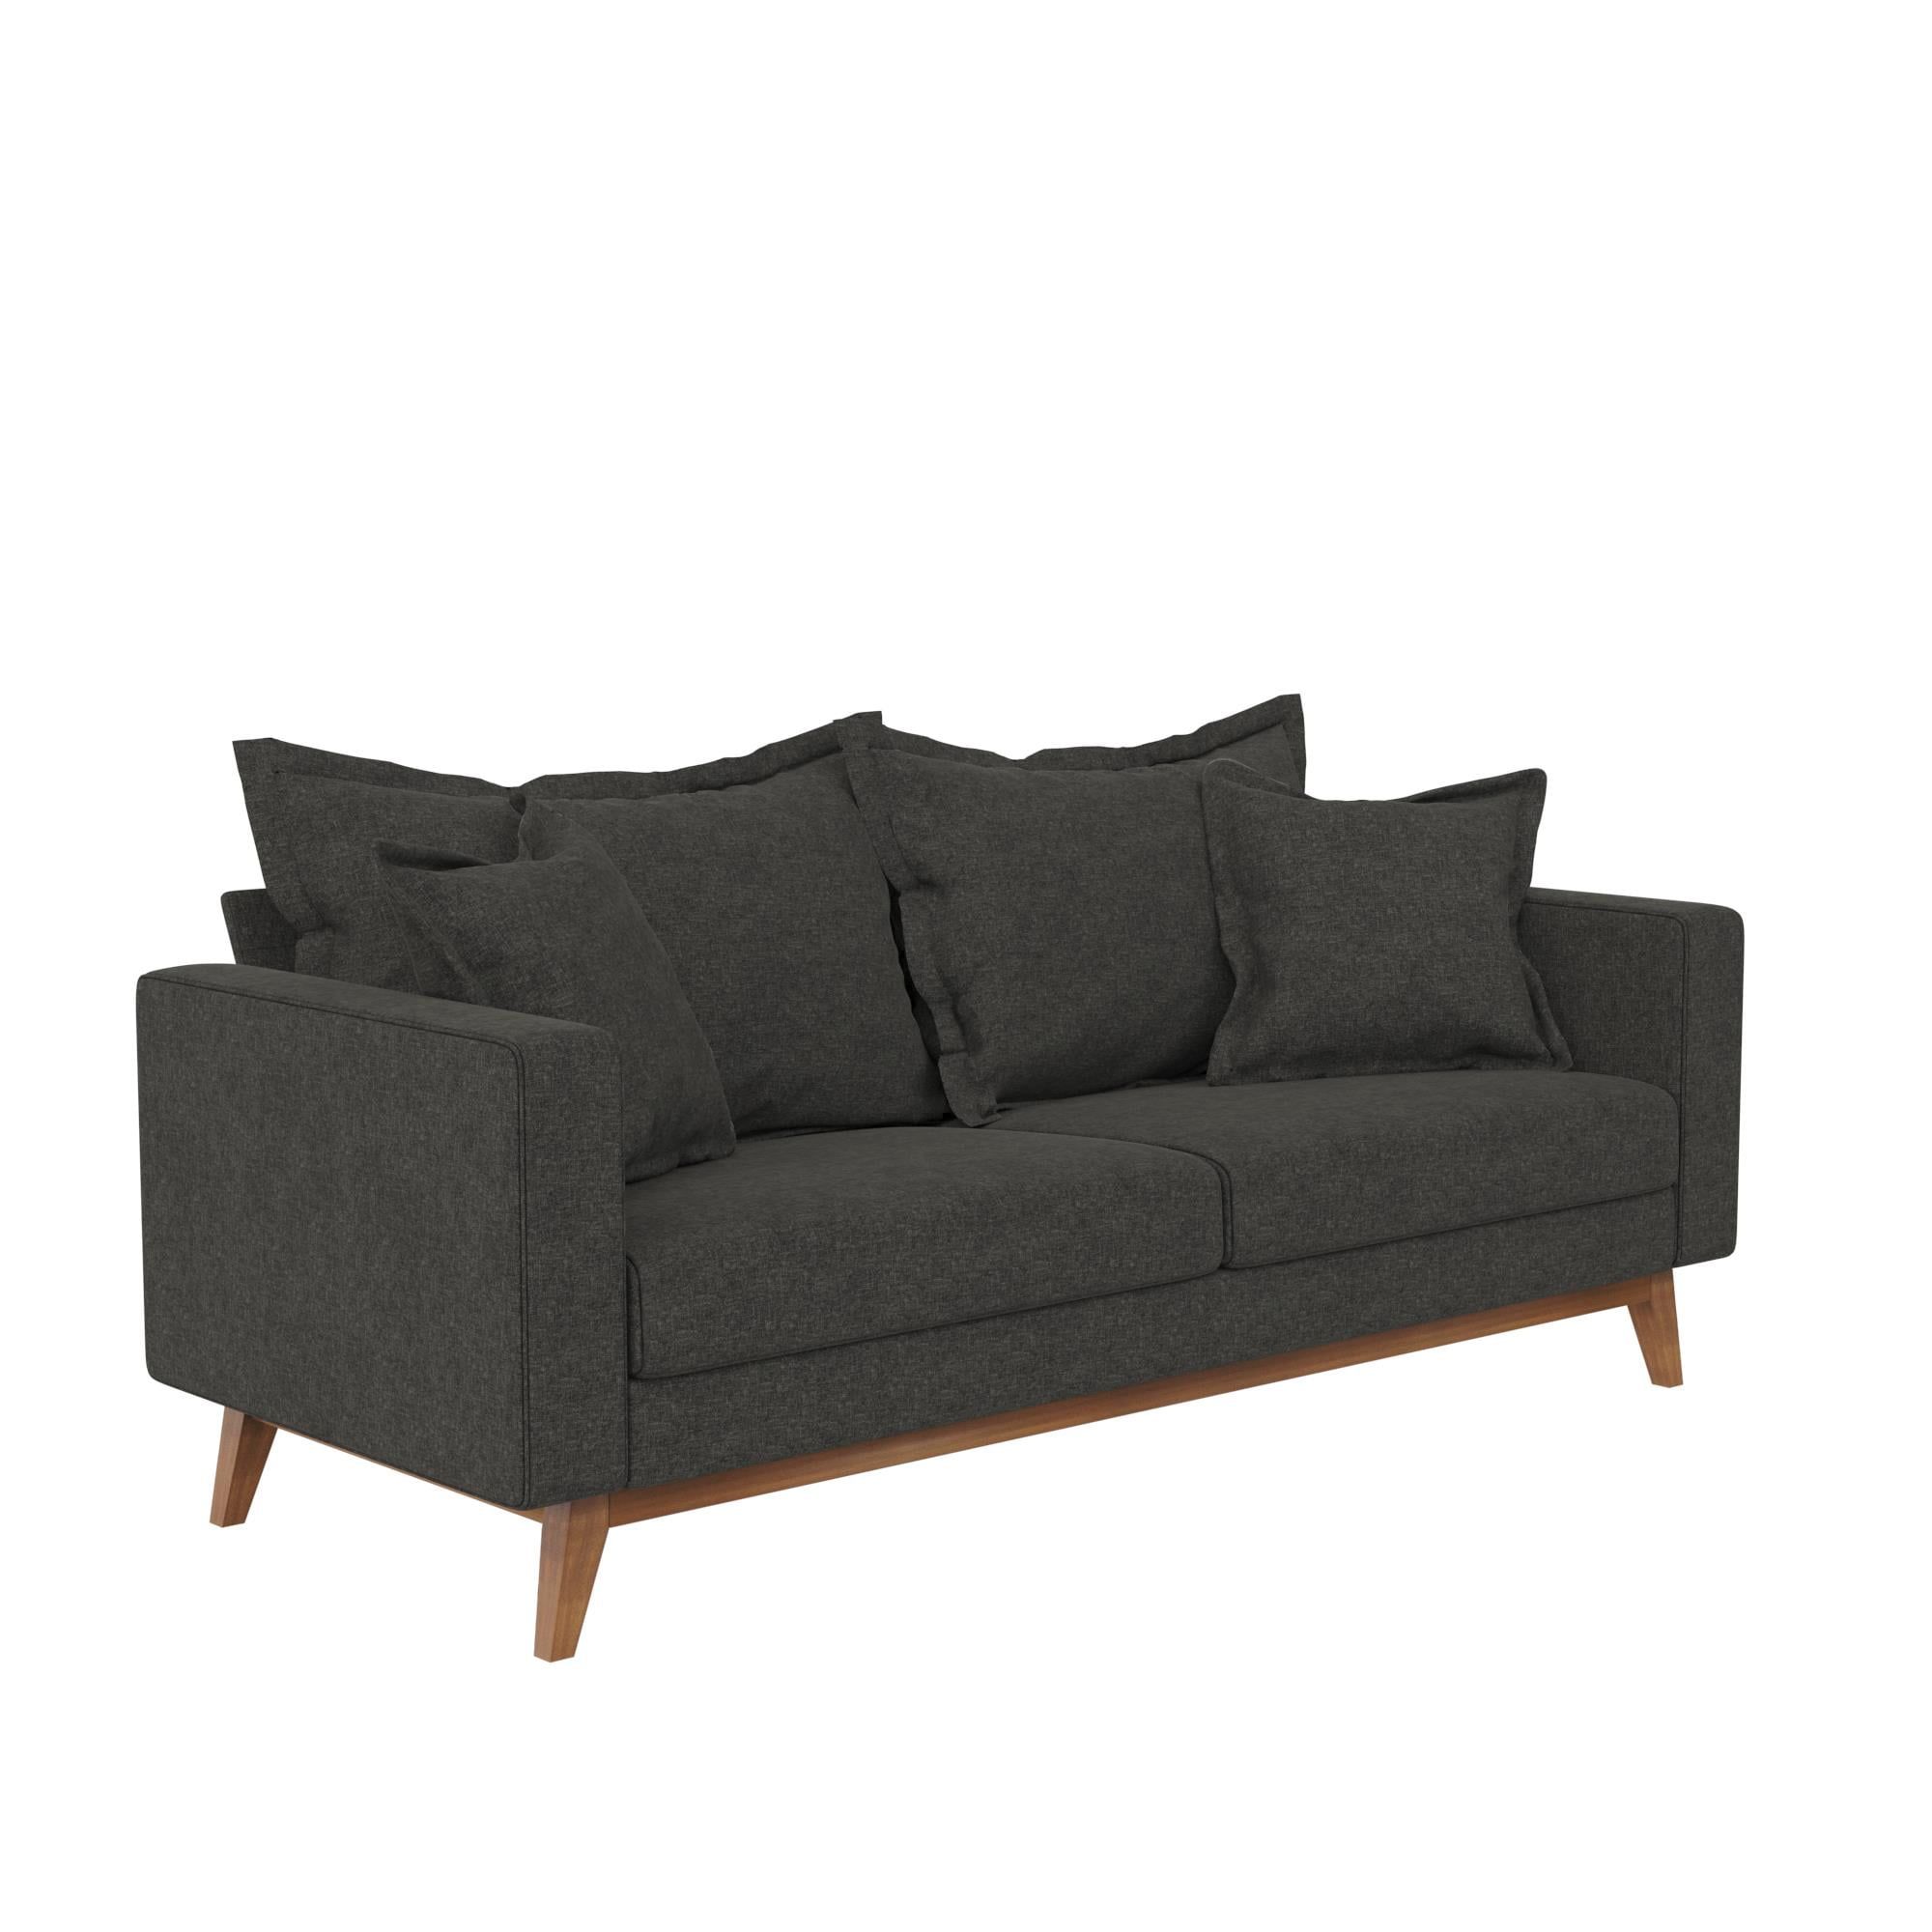 Dhp Miriam Pillowback Wood Base Sofa, Gray Linen | Bigbigmart Regarding Sofas With Pillowback Wood Bases (View 15 of 15)